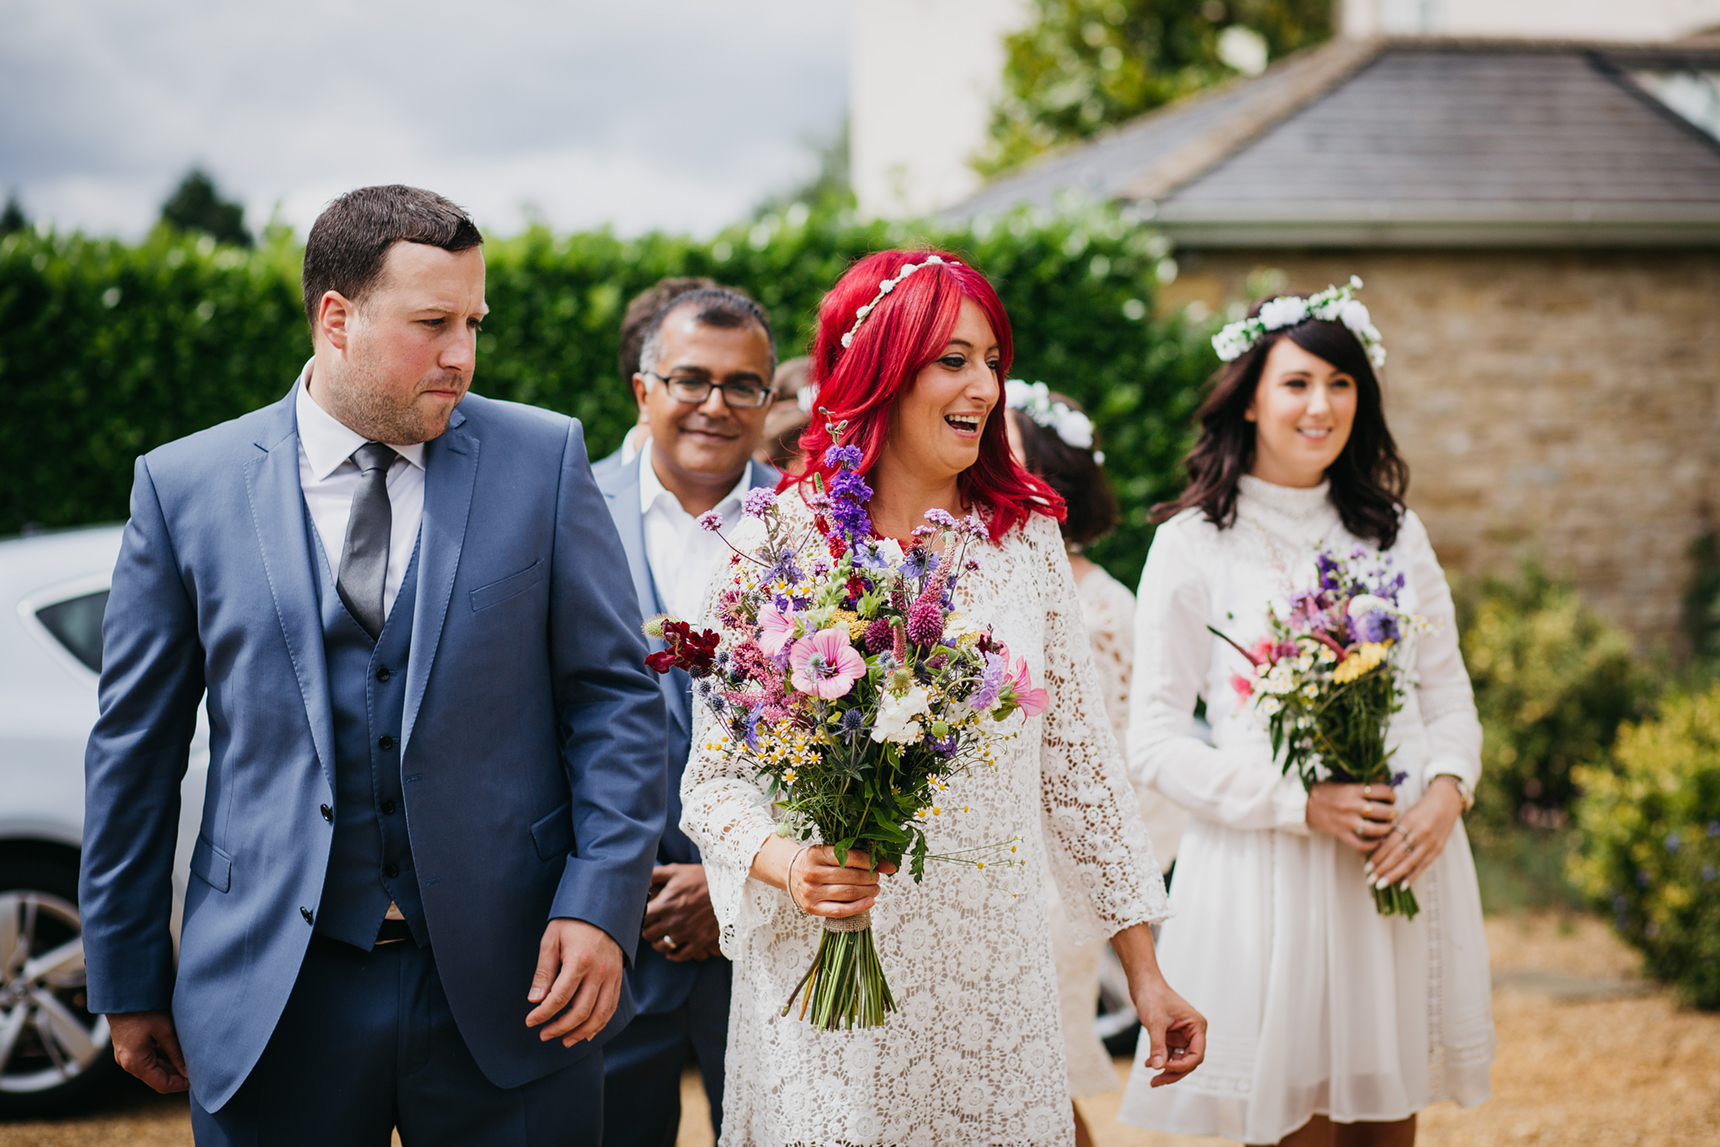 Stratford-upon-Avon wedding photographer